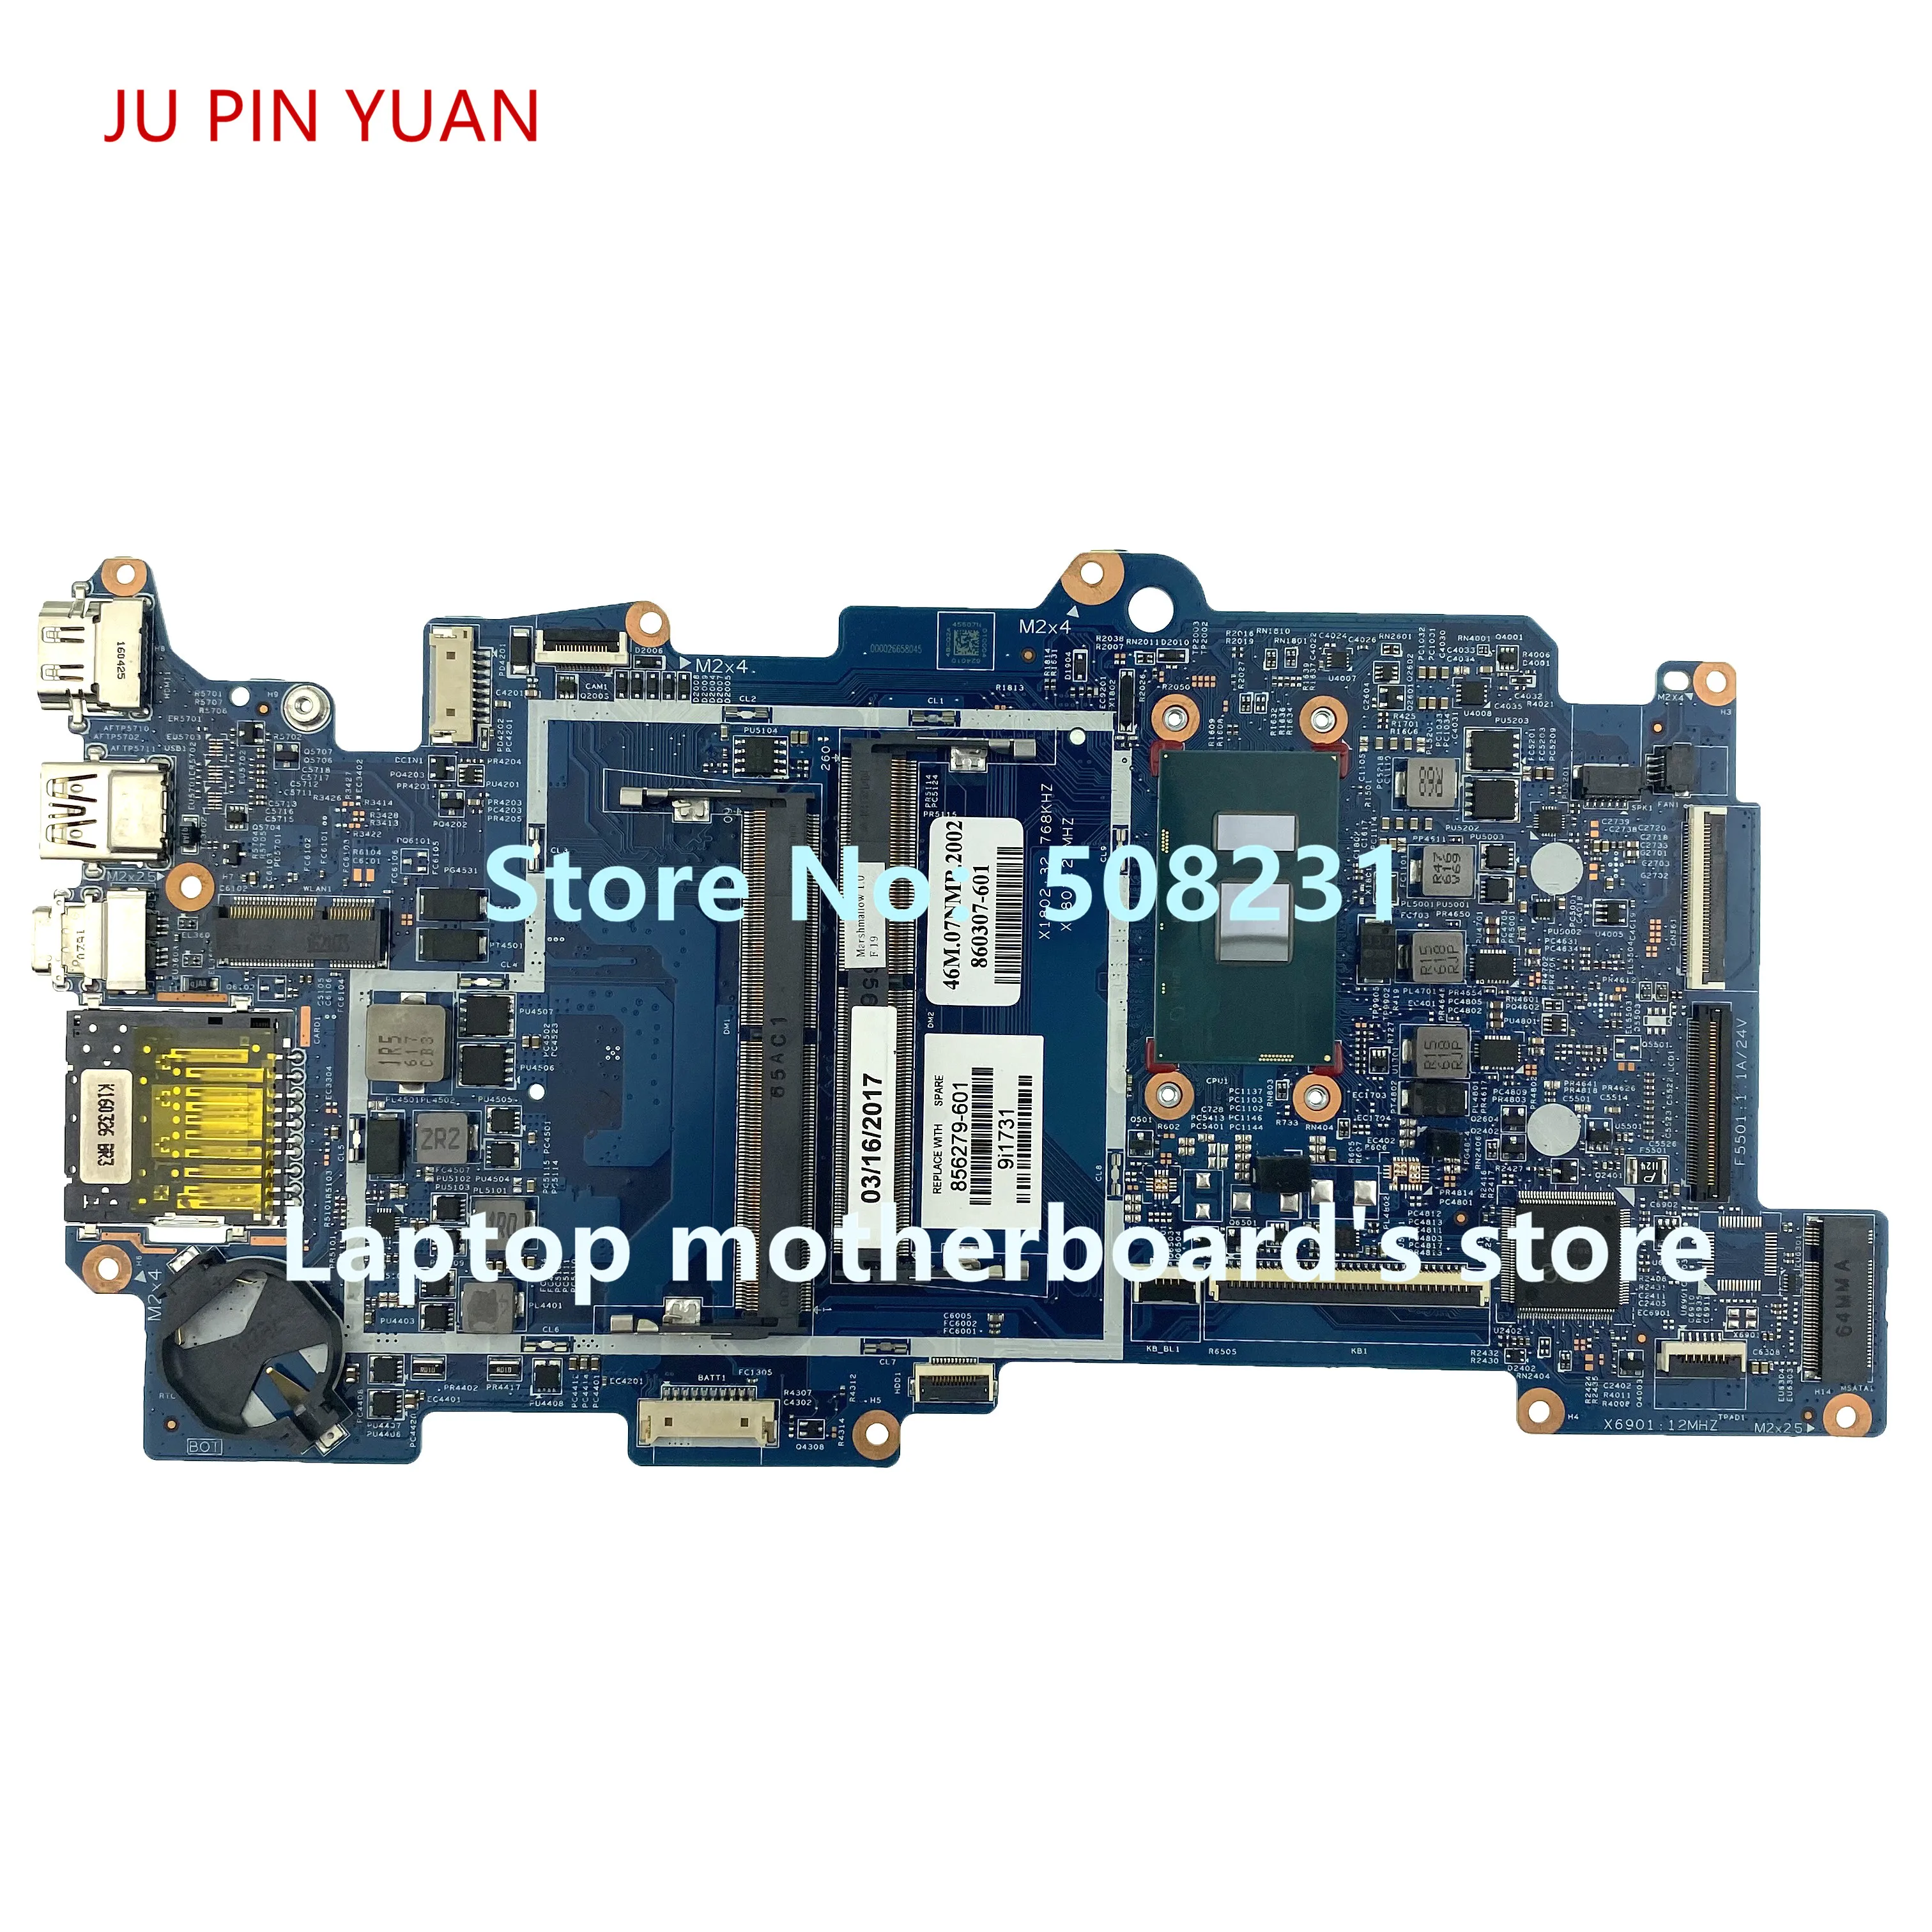 JU PIN YUAN 856279-001 856279-601 15257-2N Laptop motherboard For HP ENVY X360 M6-AQ 15-AQ Mainboard I5-6200U 100% fully Tested |